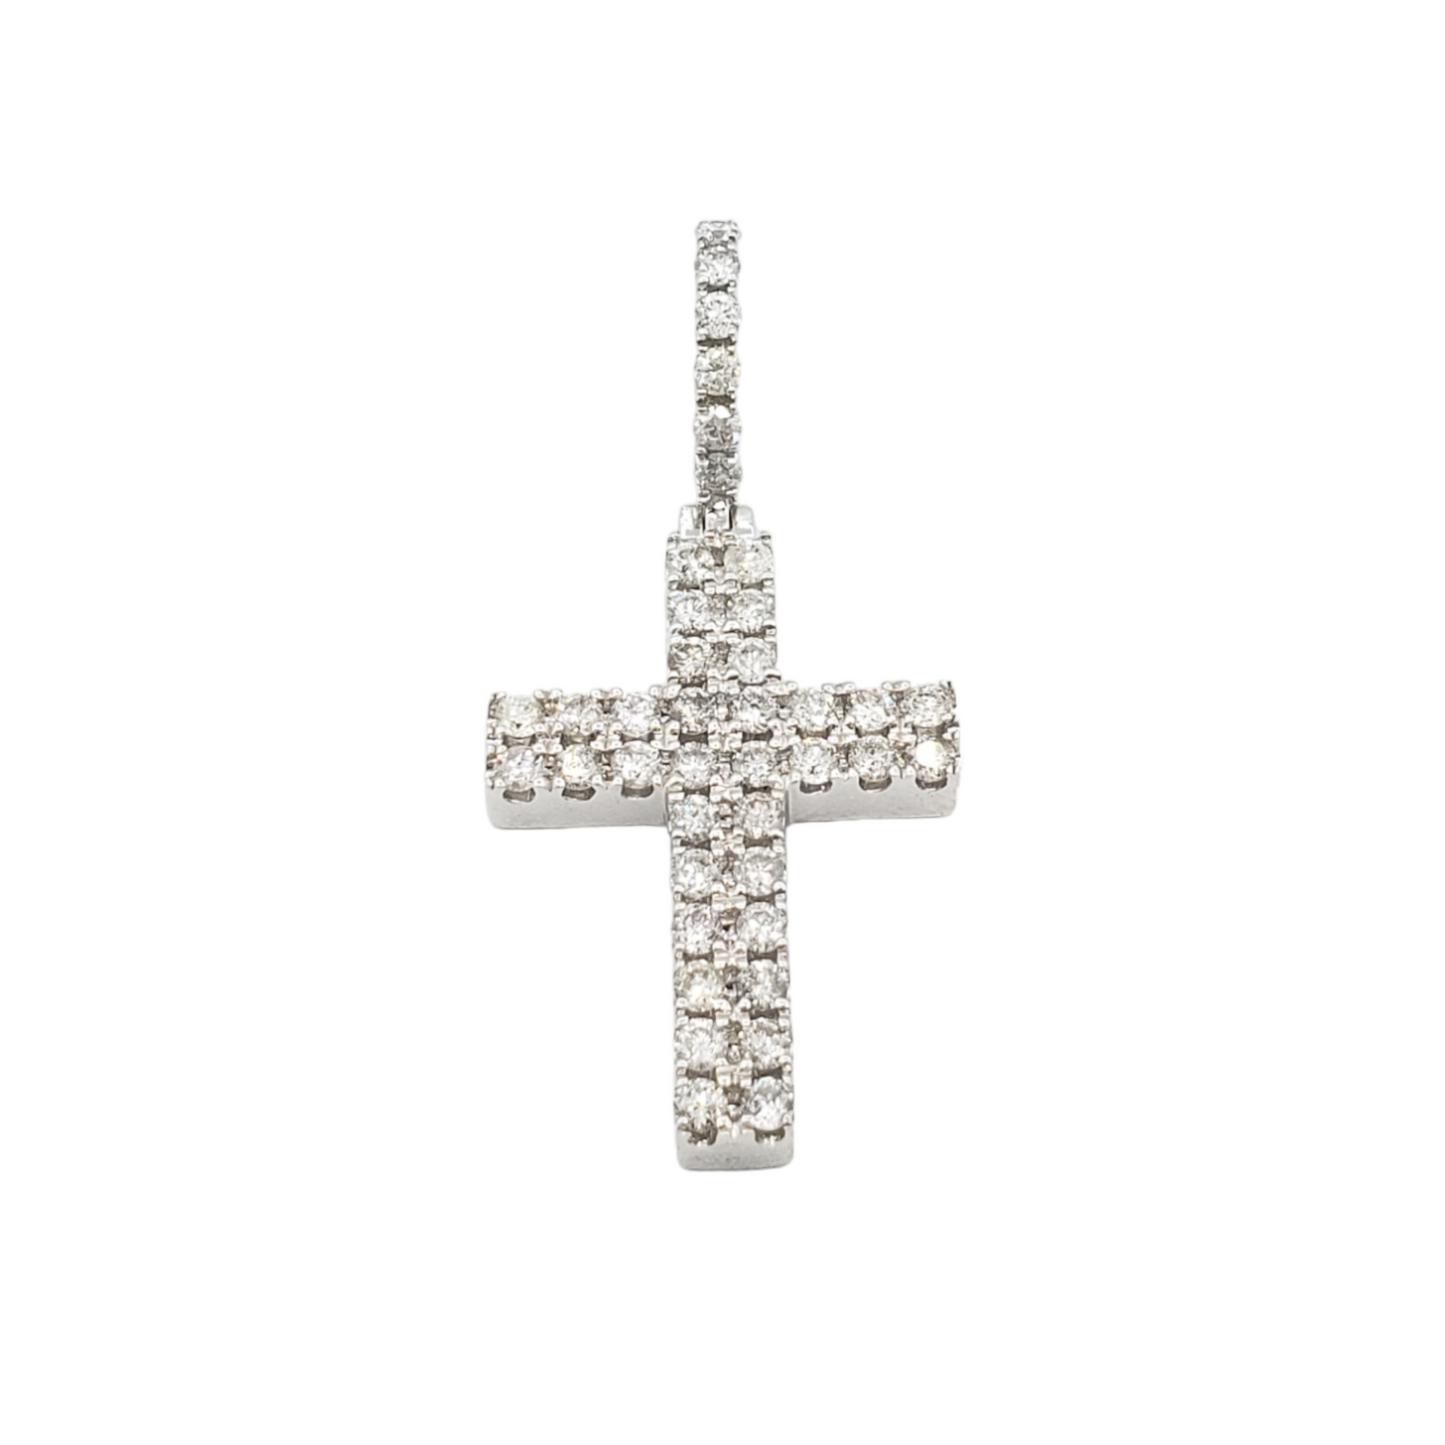 2.0 14k Two Row Diamond Cross With 1.10 Carats Of Diamonds #15922